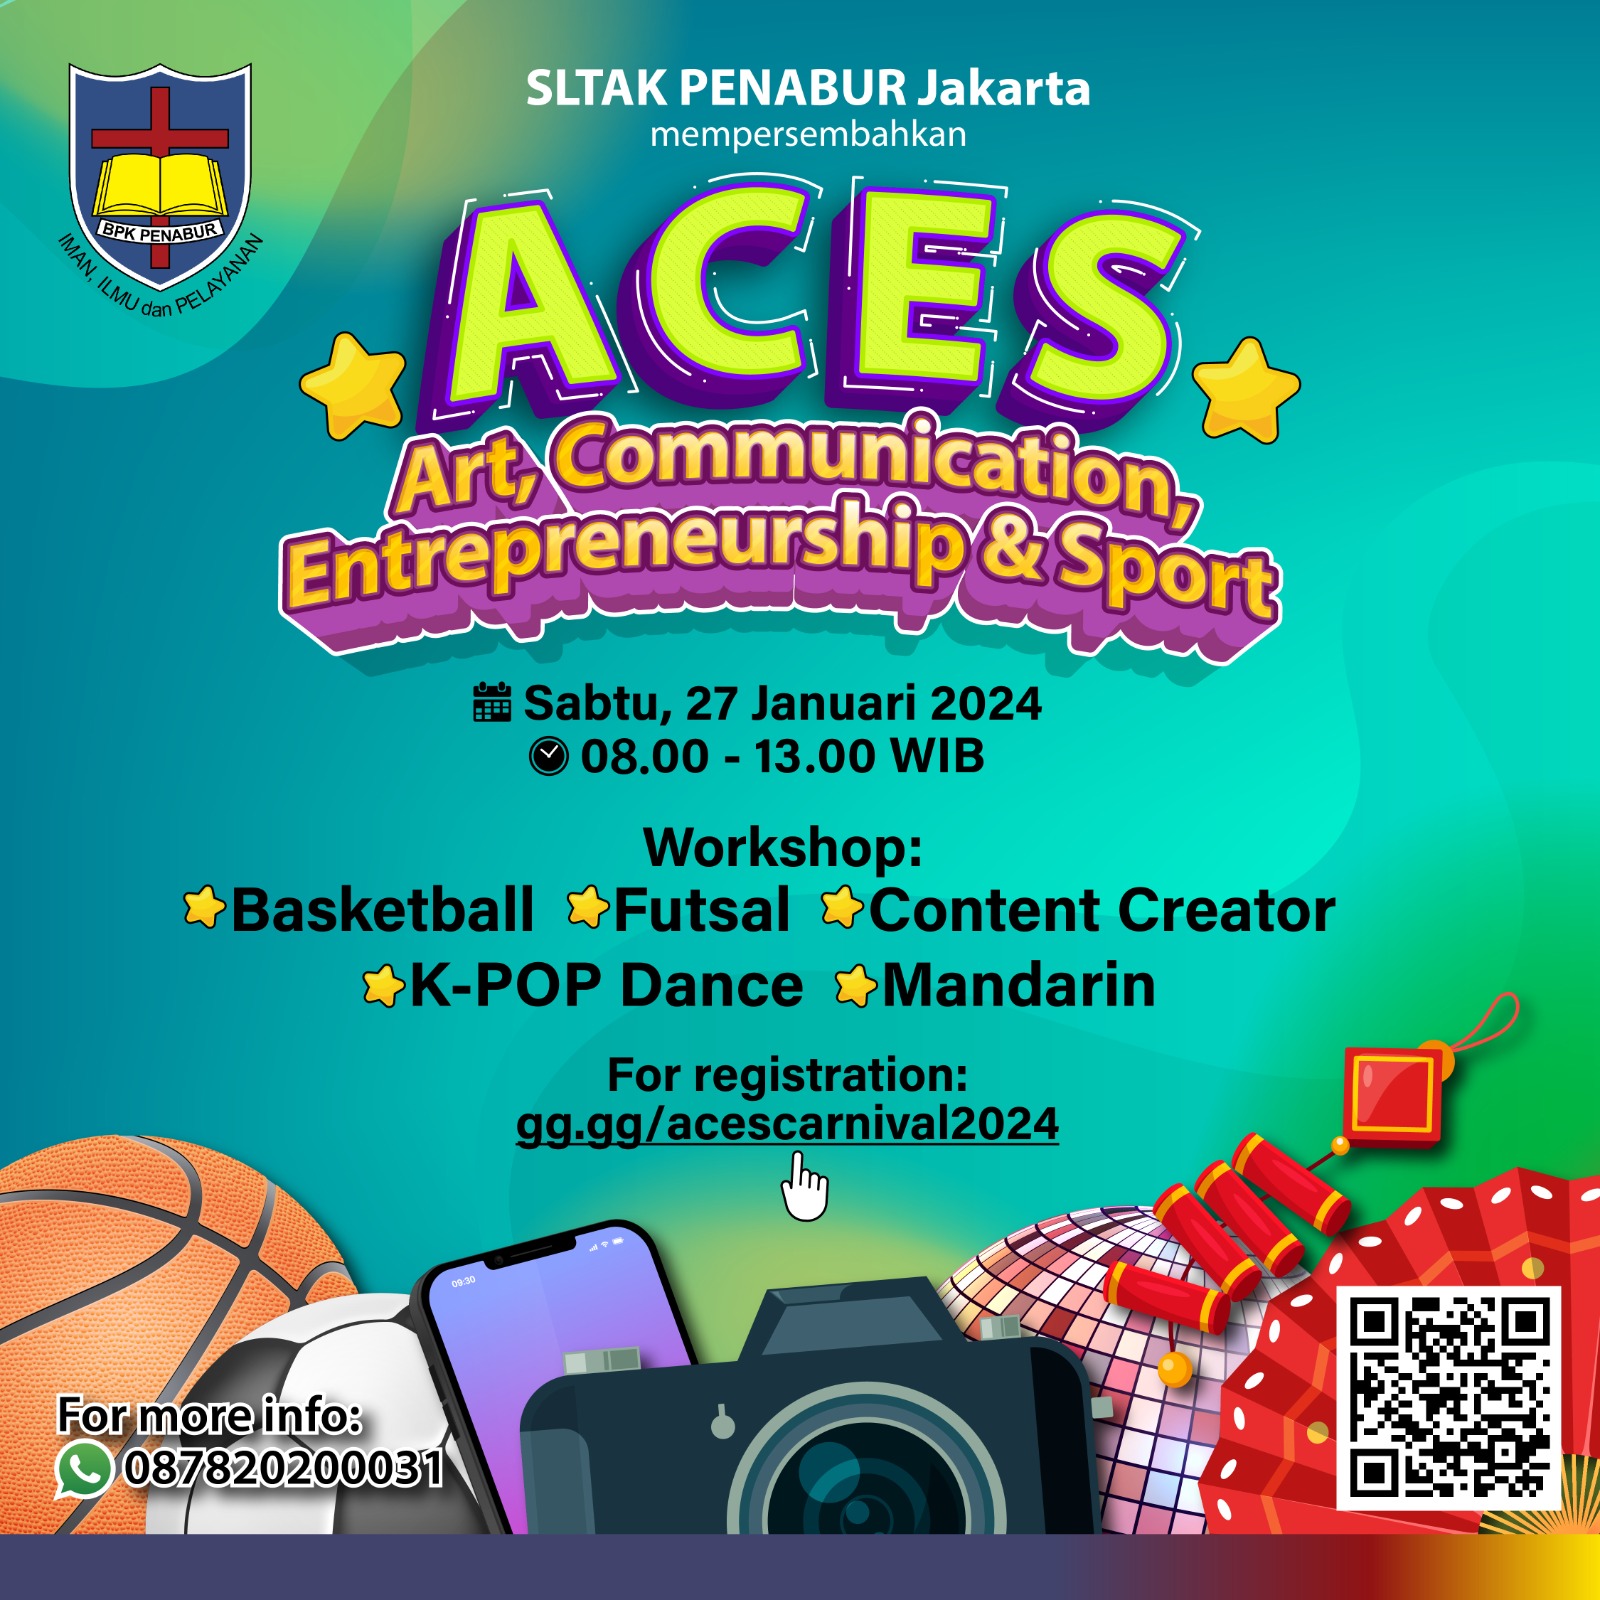 BPK PENABUR Jakarta Presents ACES "Art, Communication, Enterpreneurship, & Sports